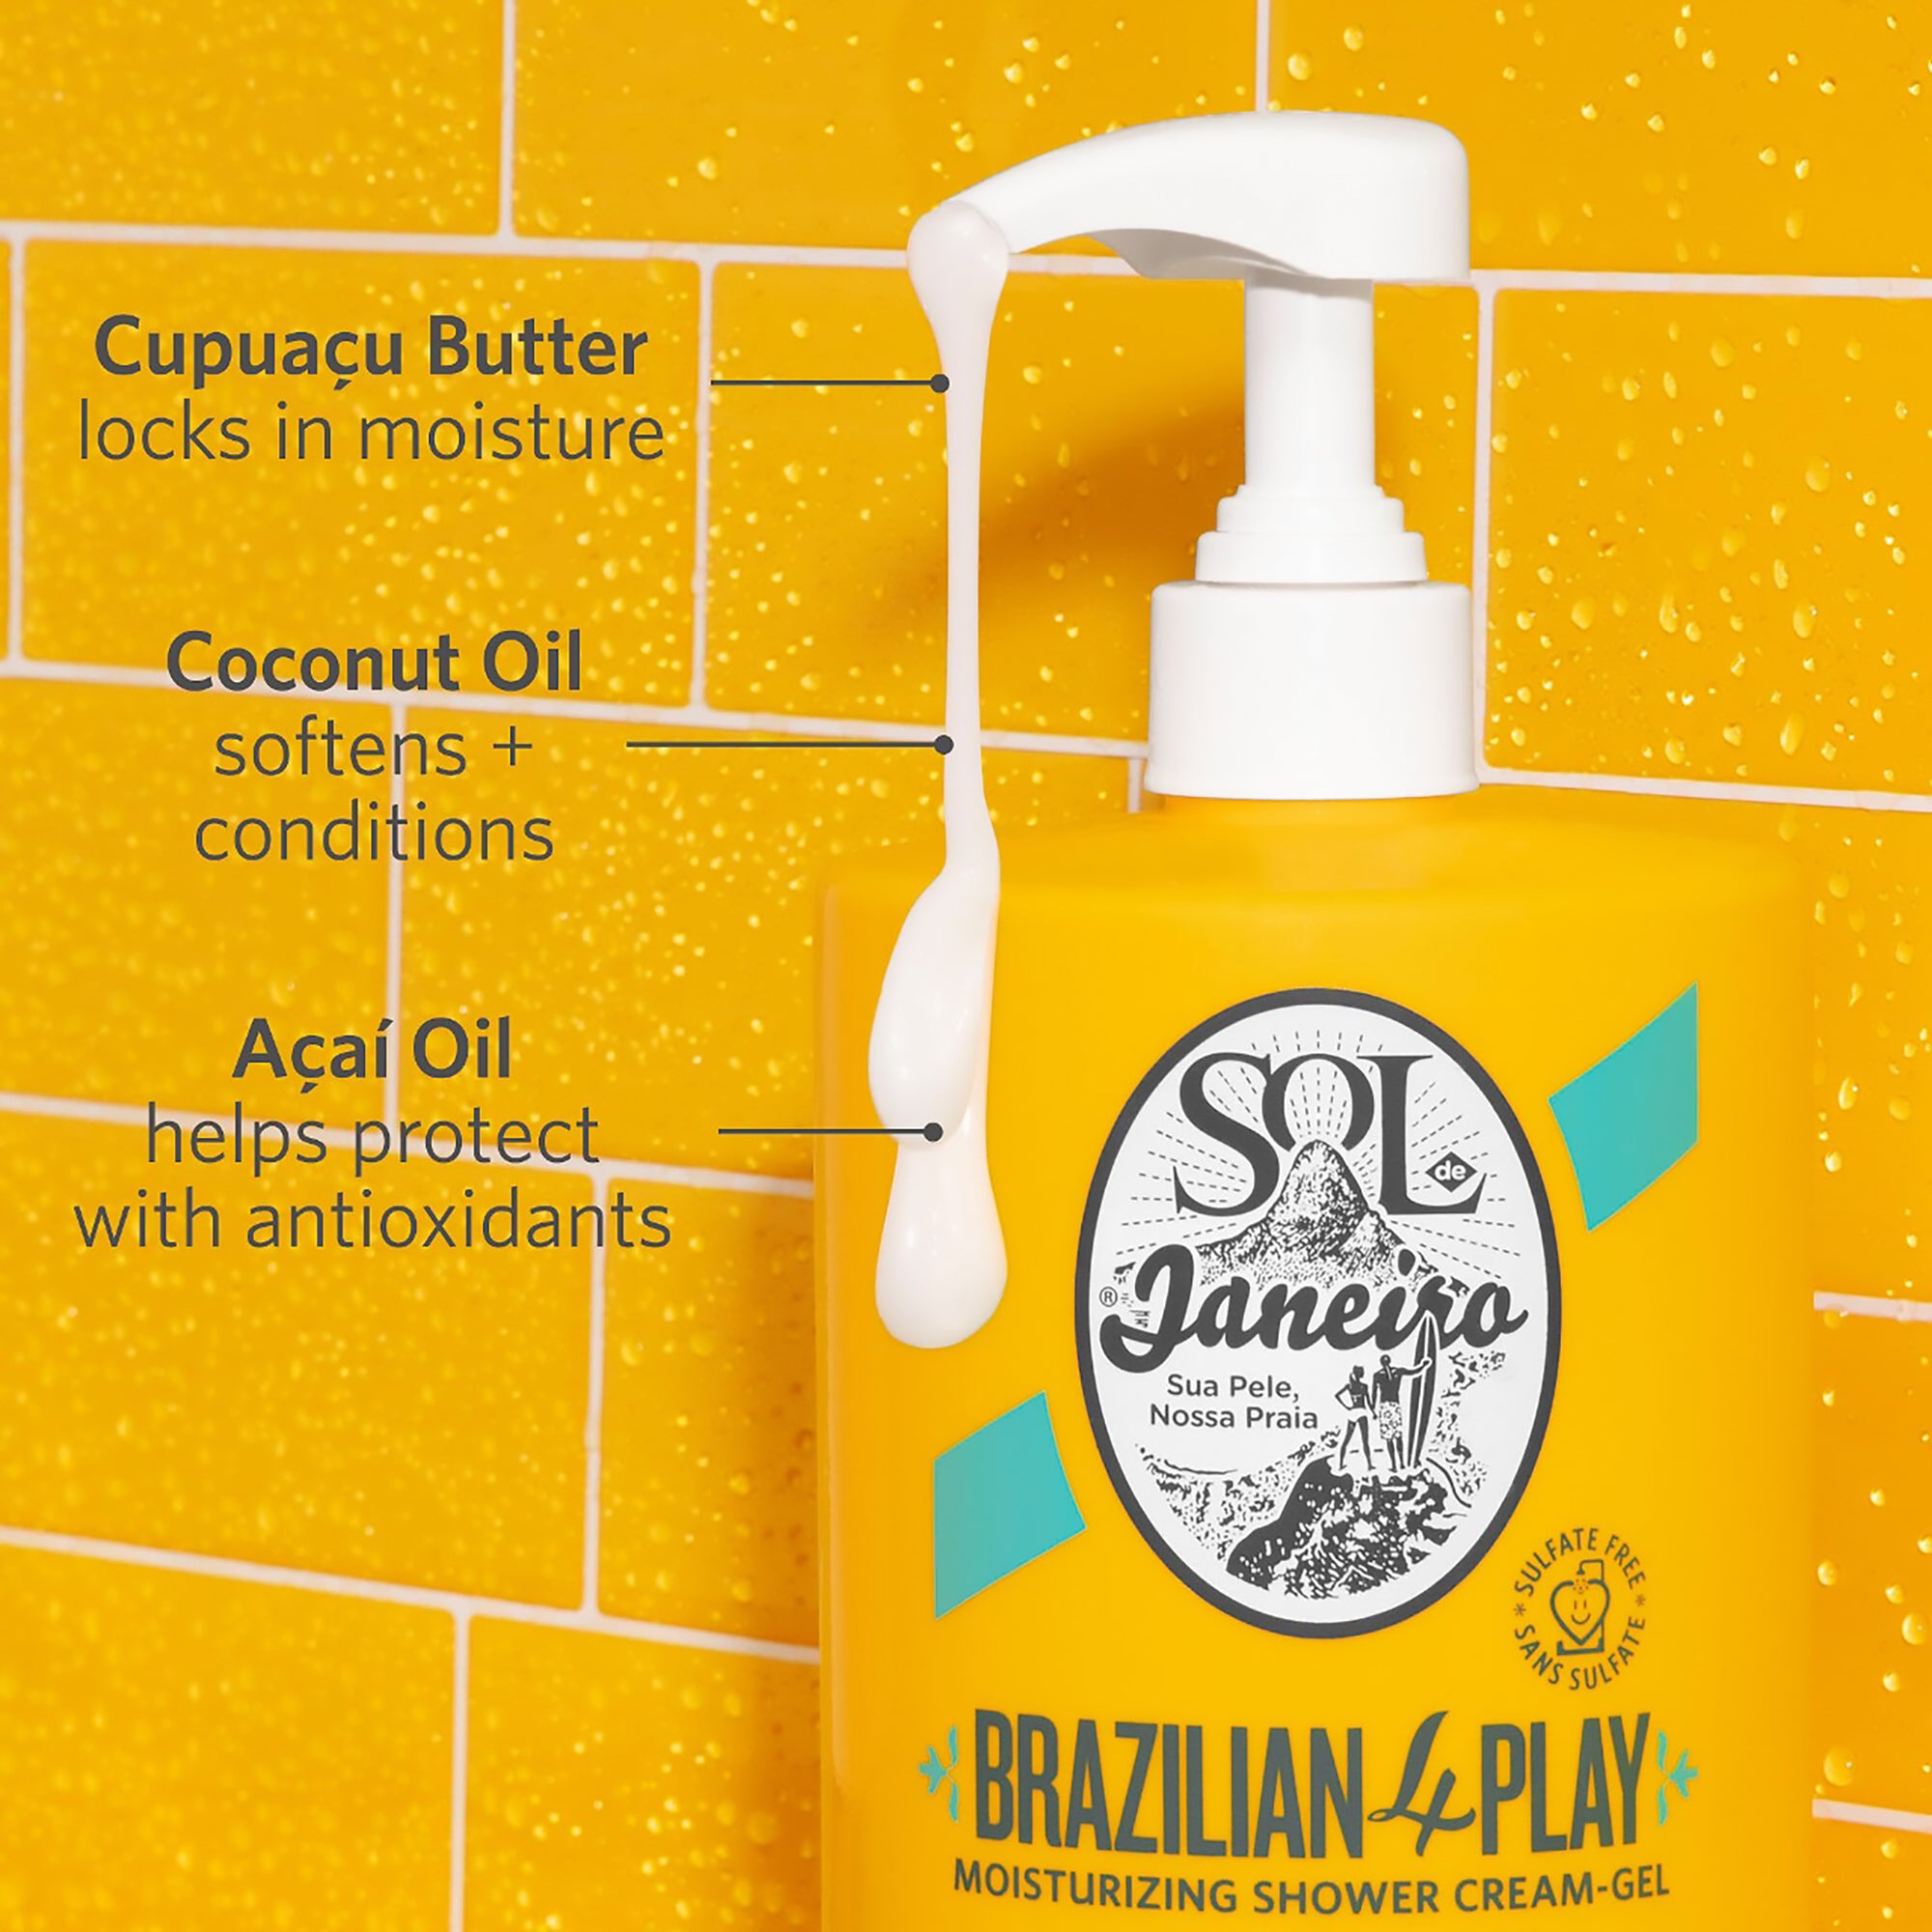 Sol de Janeiro Brazilian 4 Play Moisturizing Shower Cream-Gel 33oz / LITER